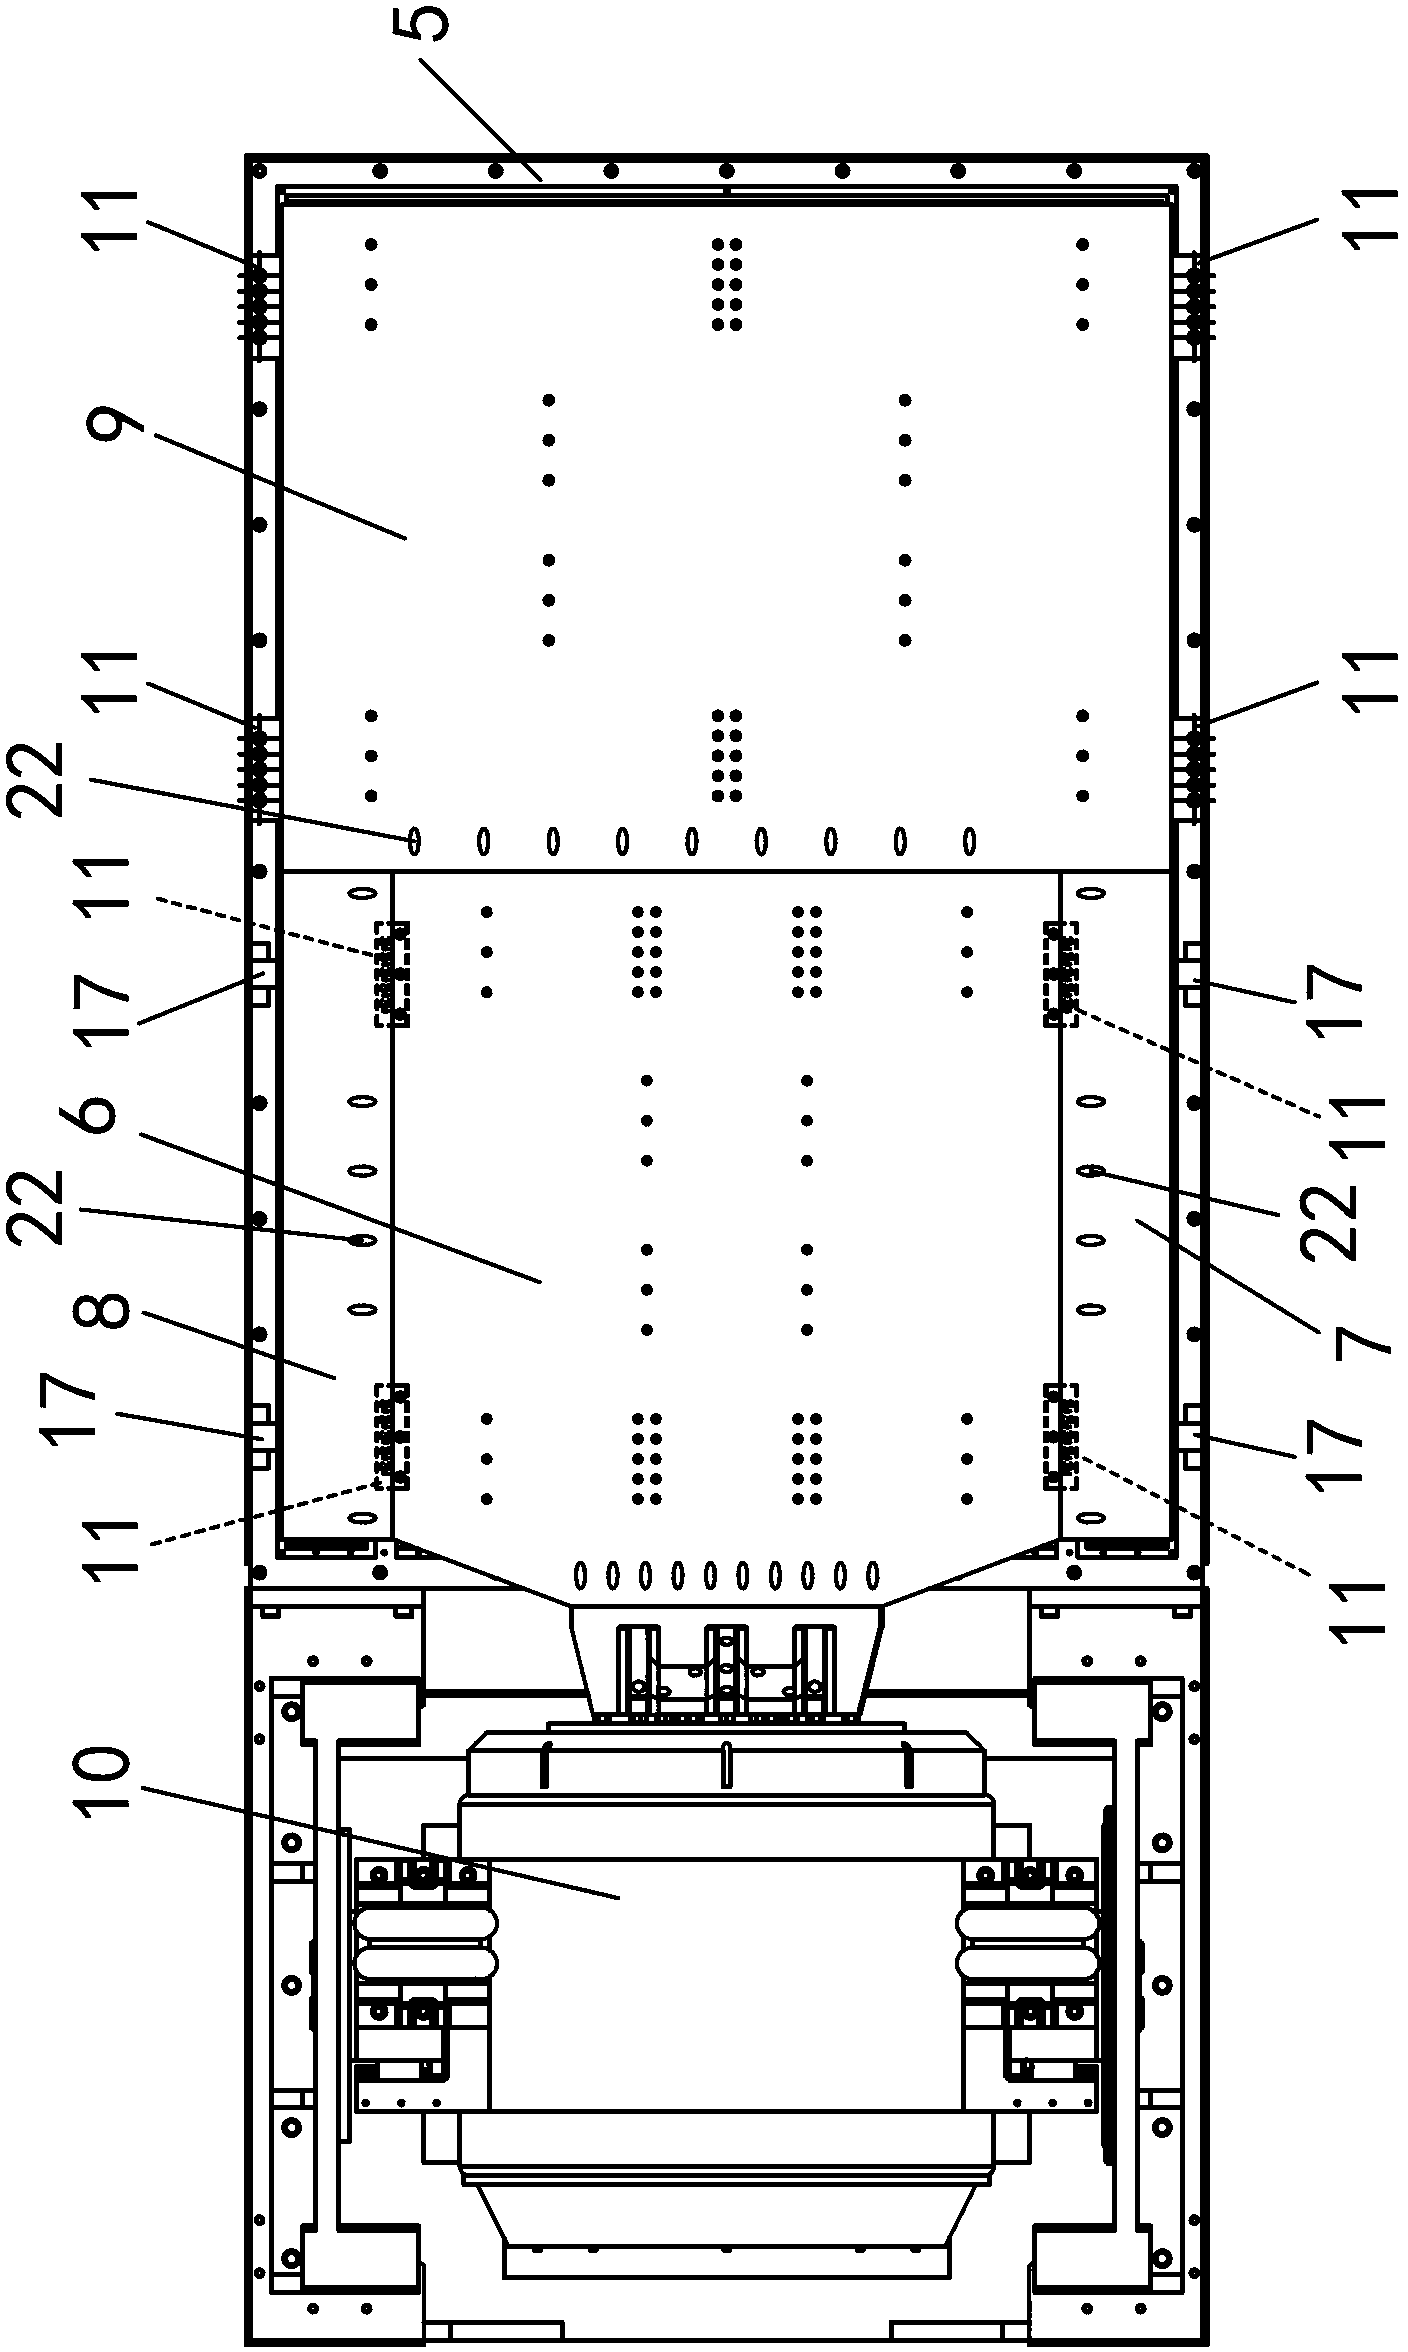 Assembly type horizontal sliding table